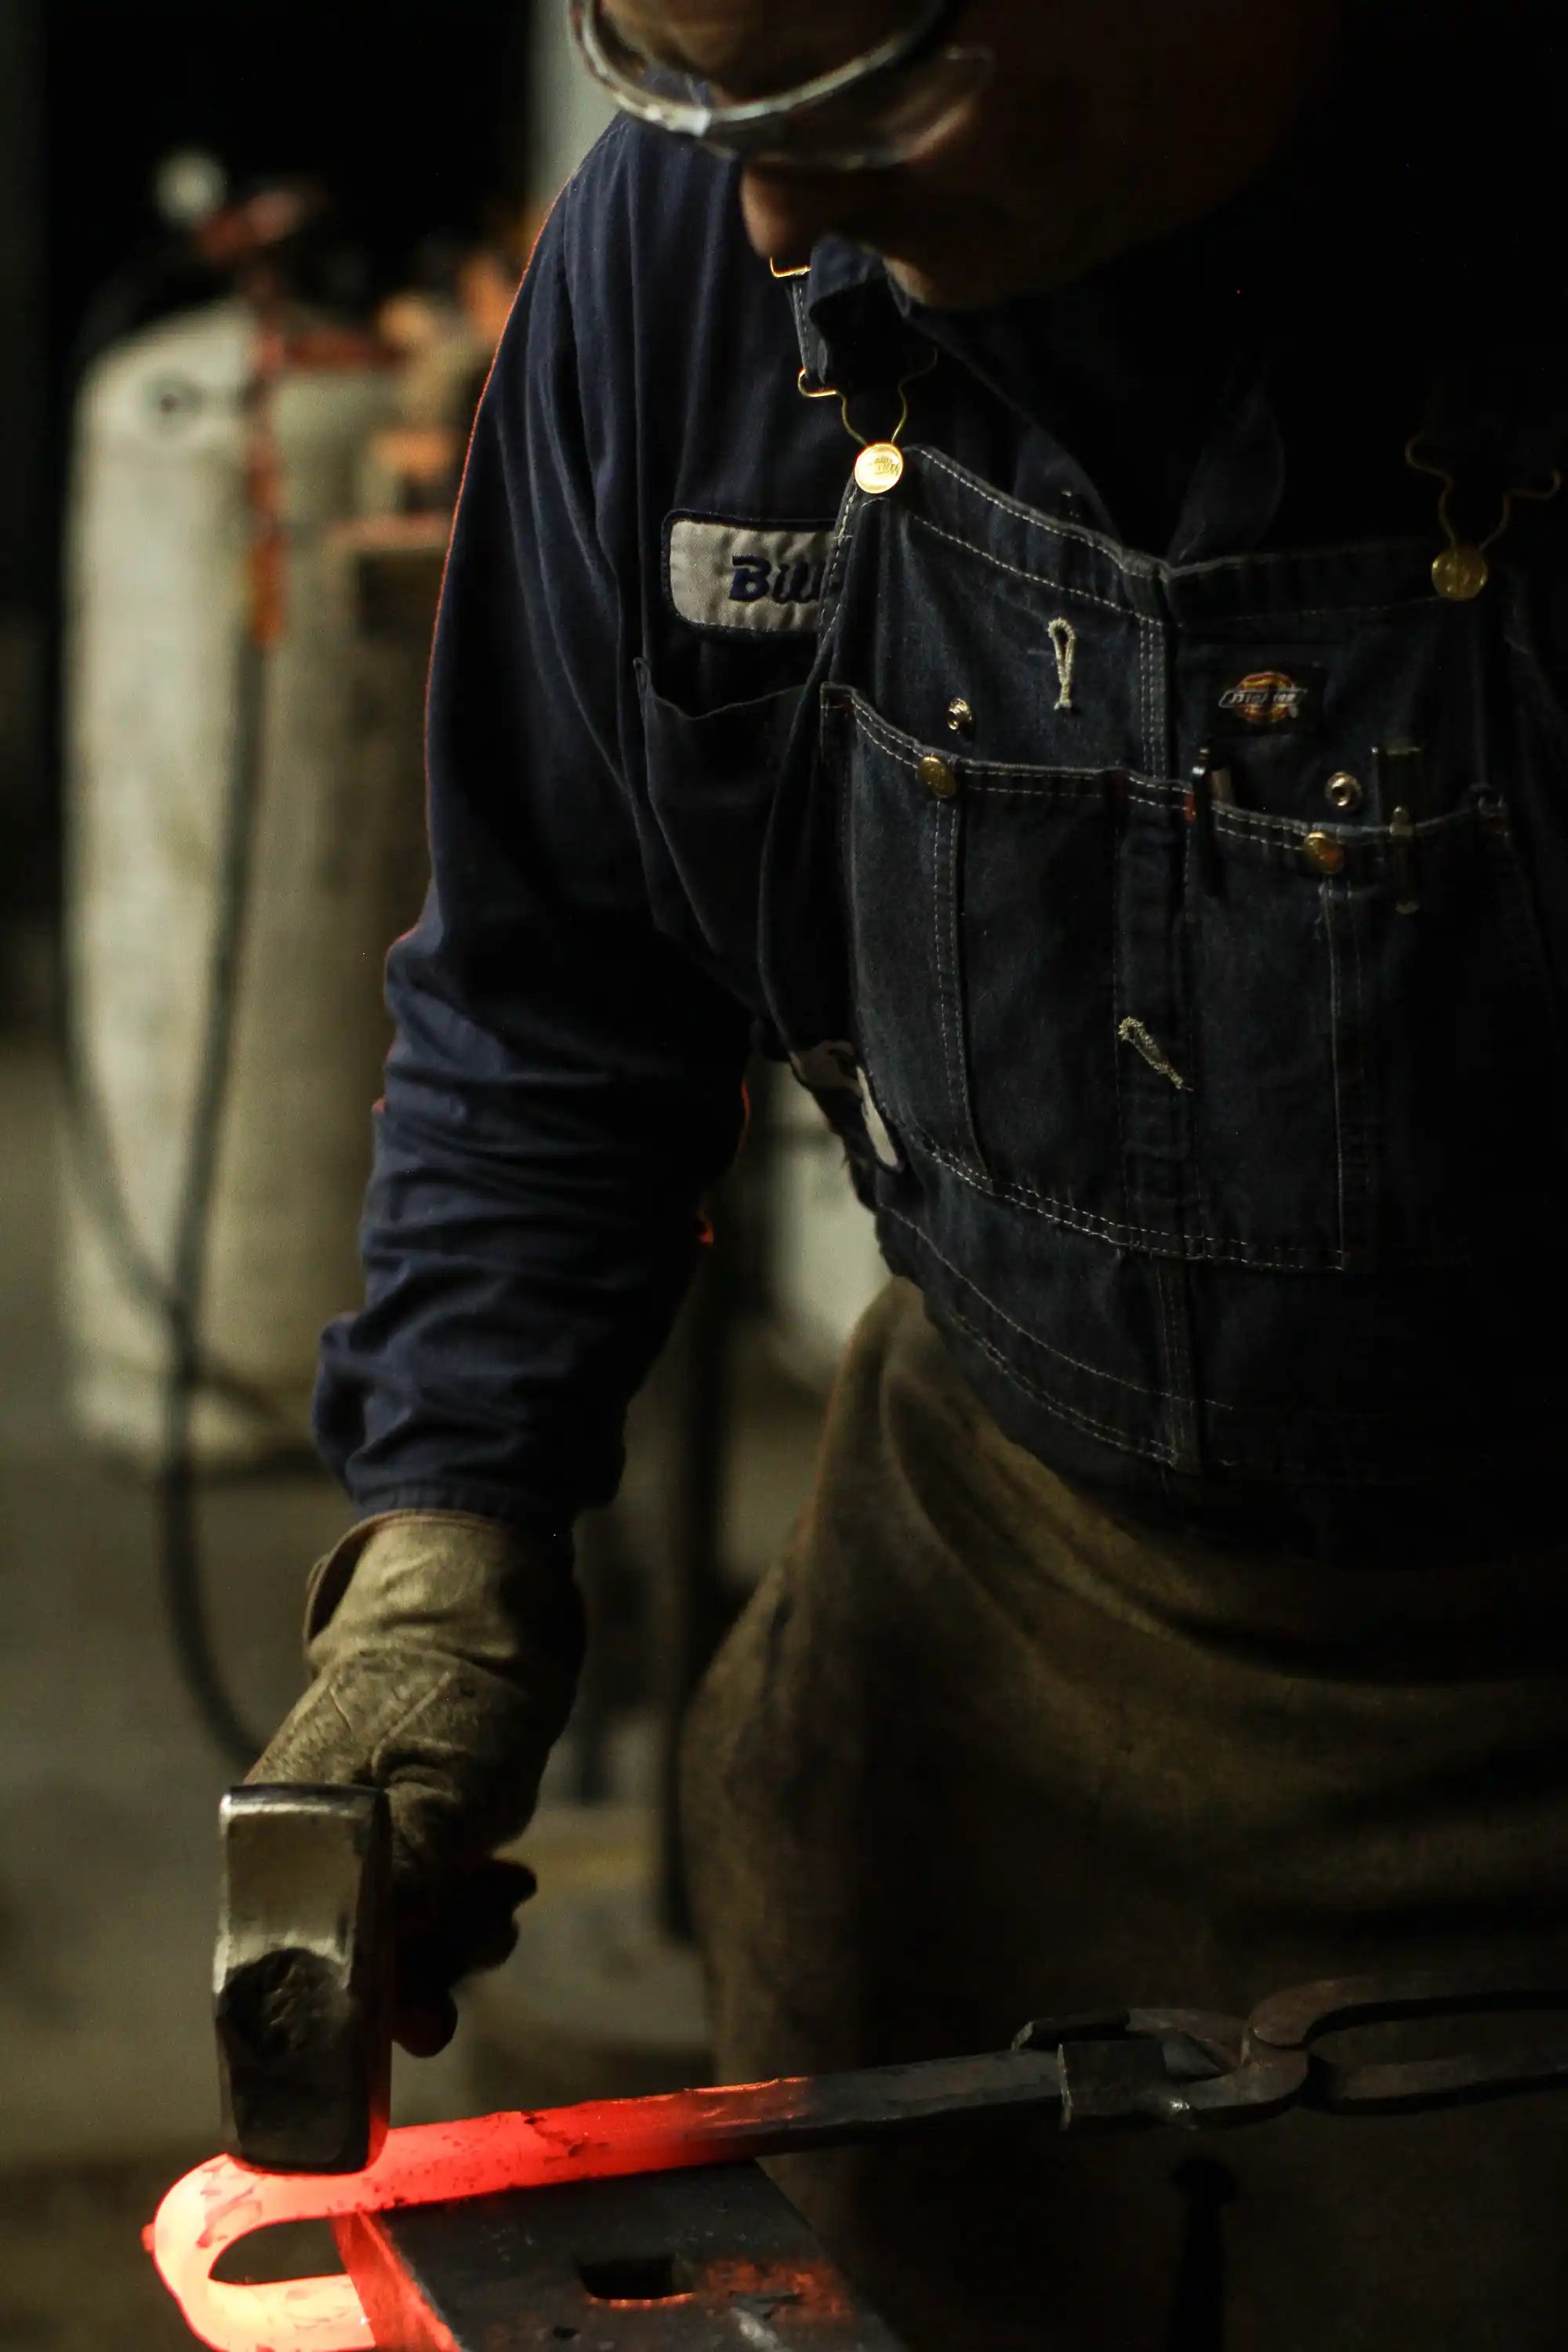 blacksmith hammering barn door hardware